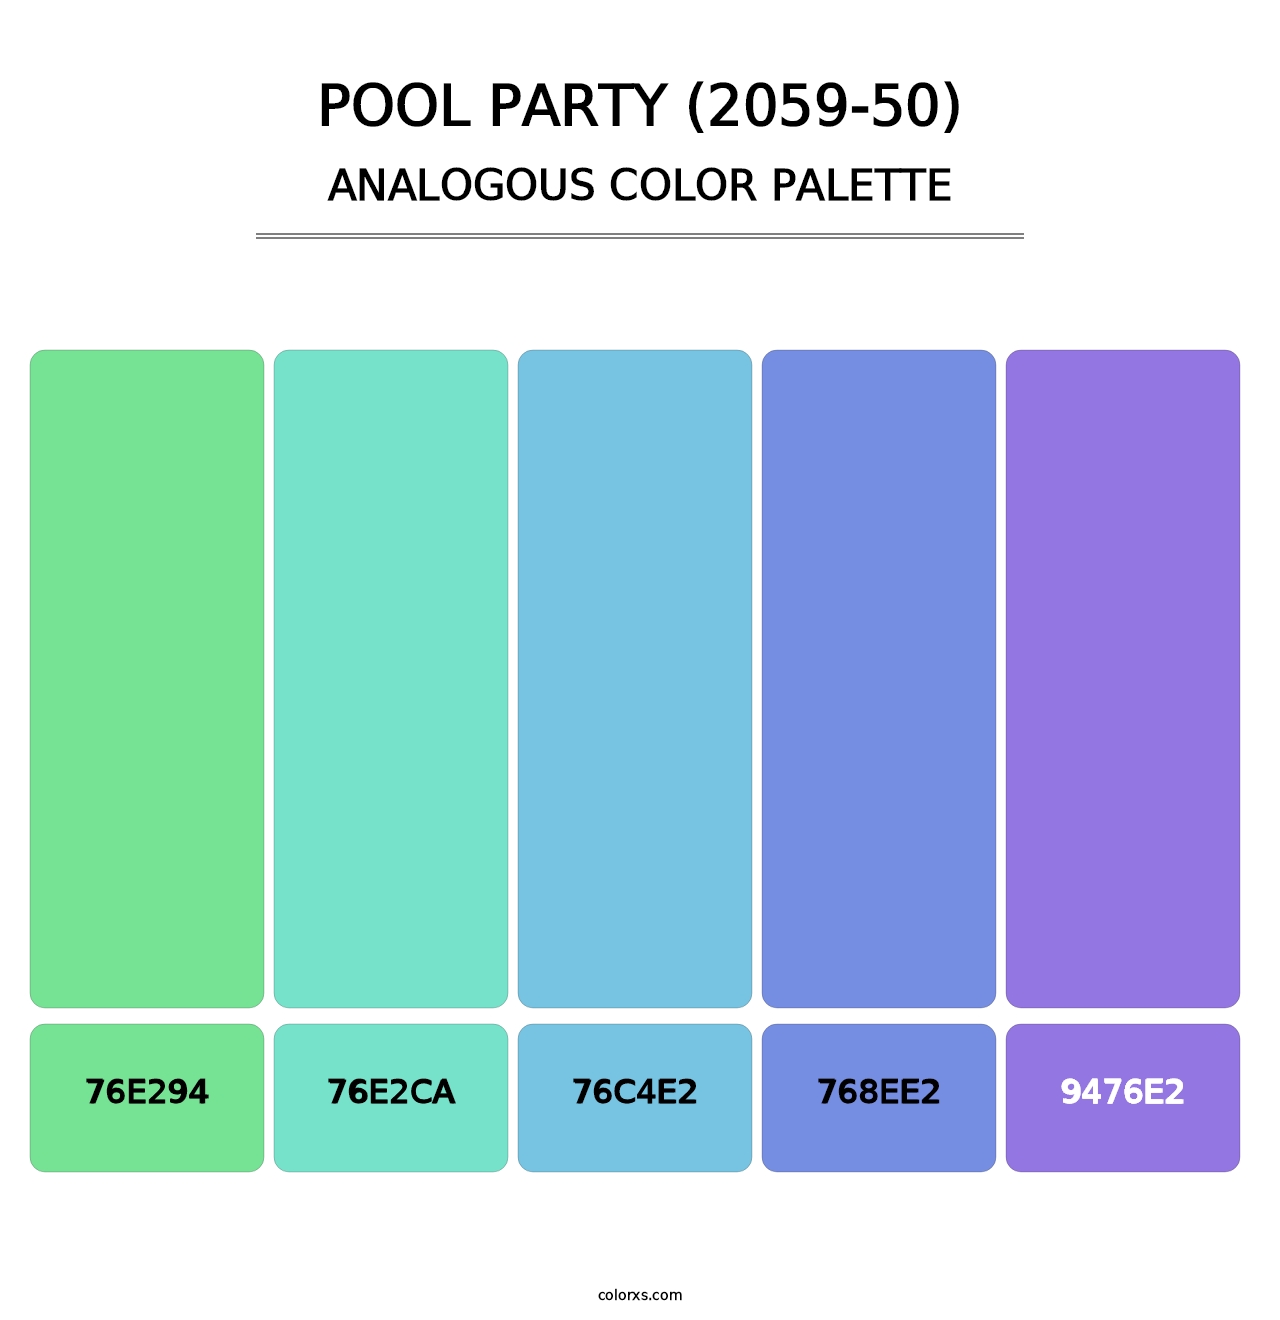 Pool Party (2059-50) - Analogous Color Palette